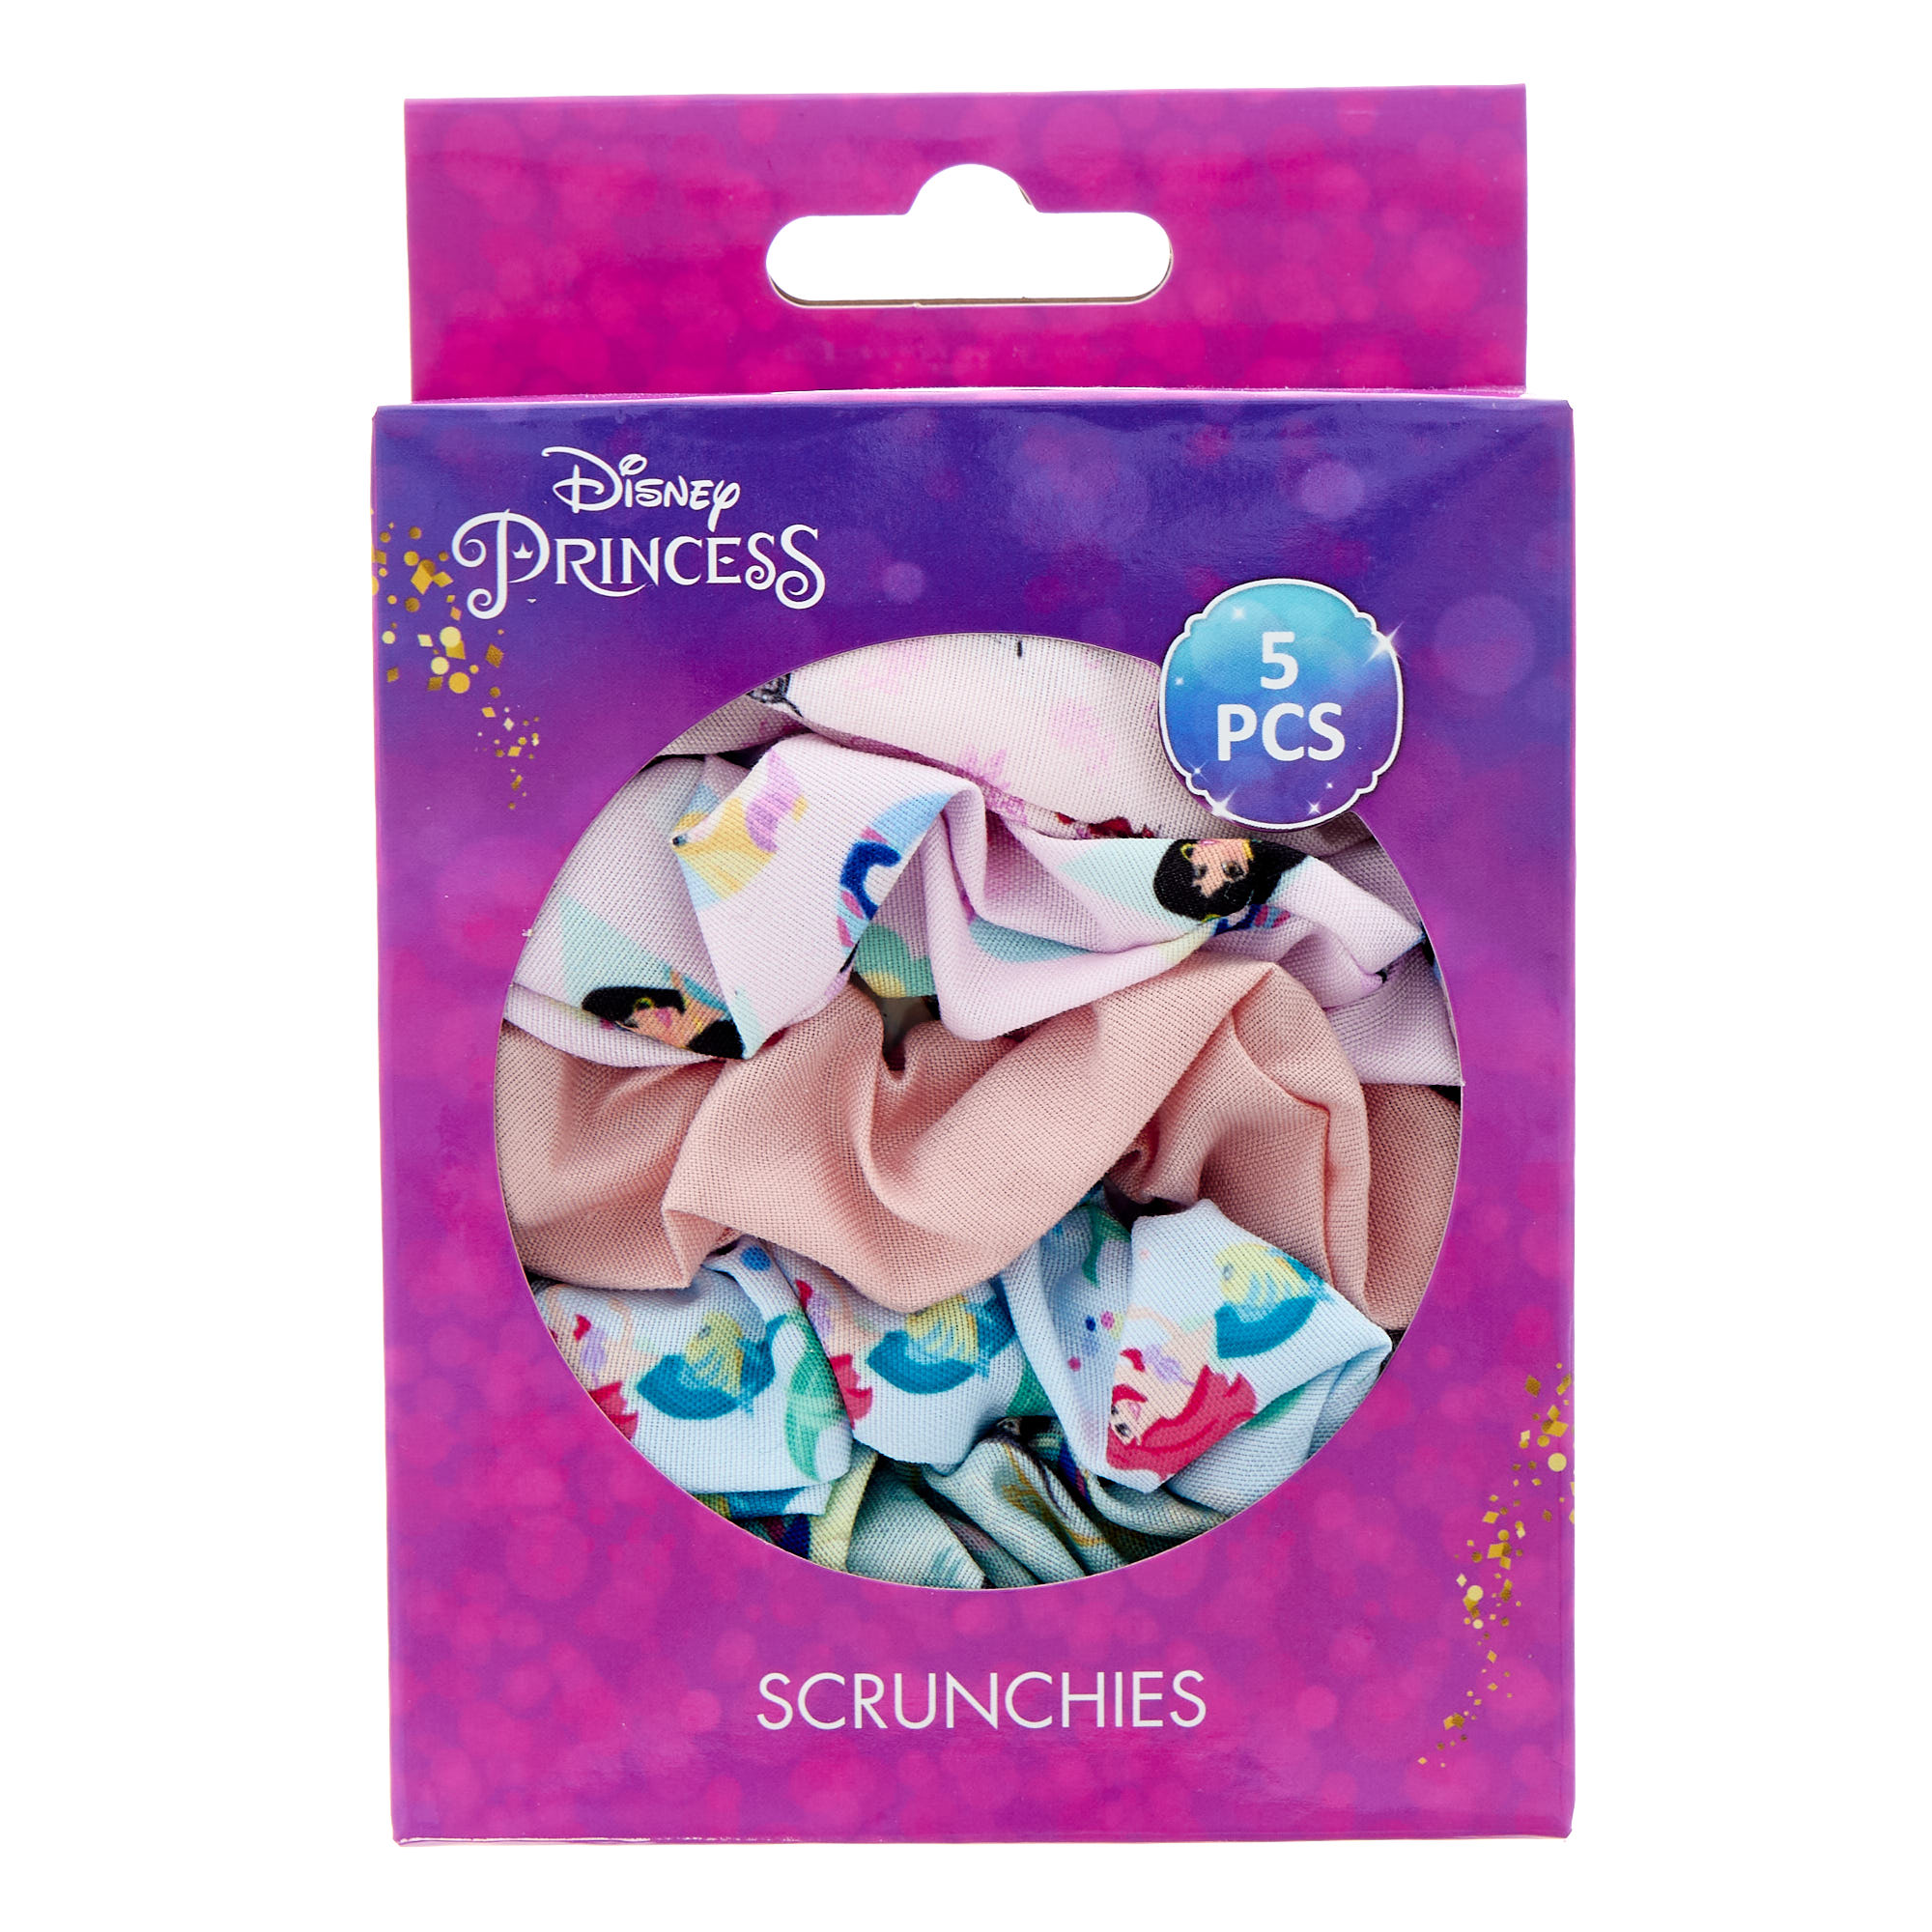 Disney Princess Scrunchies - Pack of 5